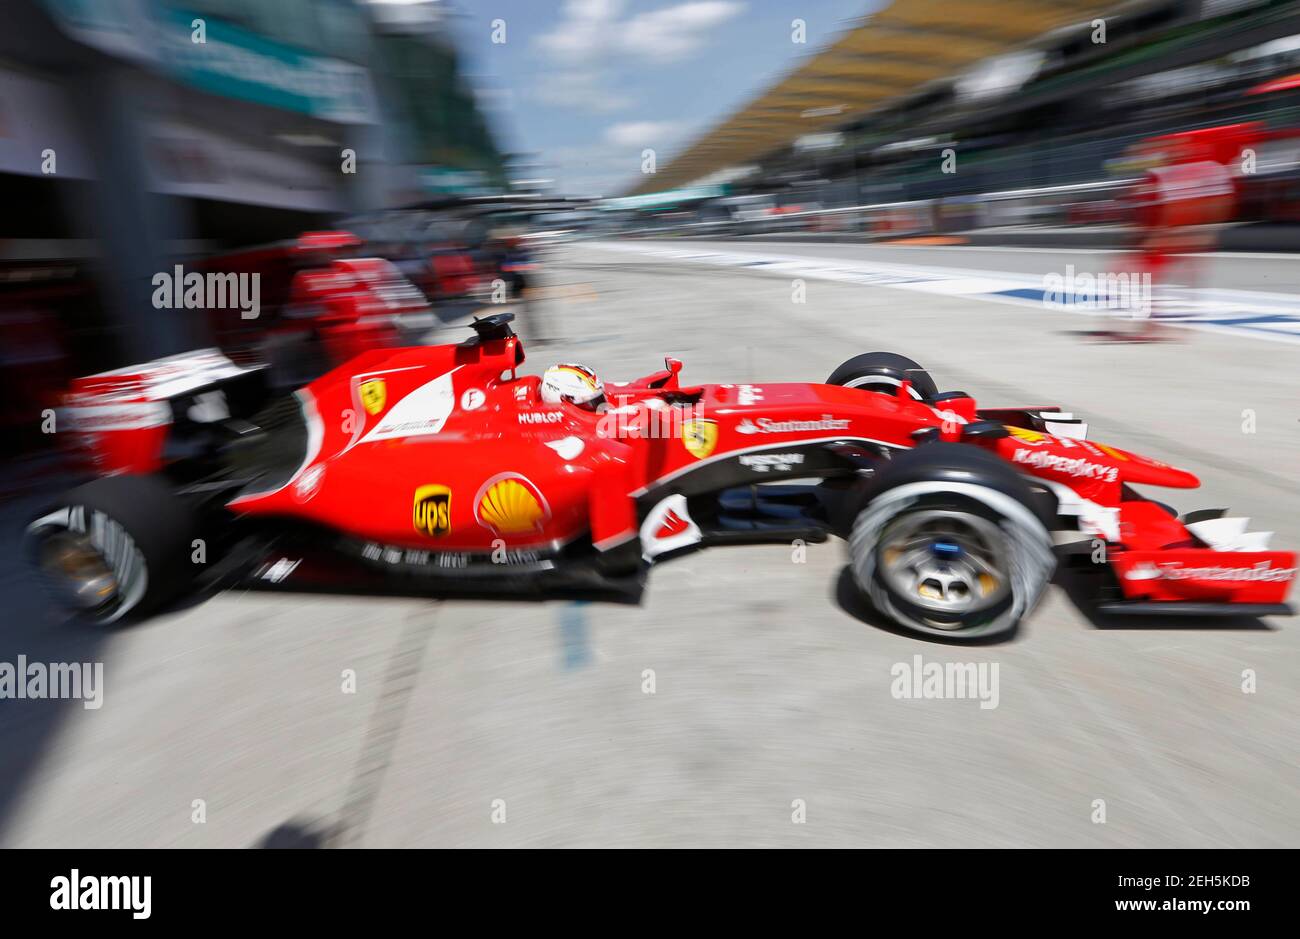 Formula One - F1 - Malaysian Grand Prix 2015 - Sepang International Circuit, Kuala Lumpur, Malaysia - 28/3/15  Ferrari's Sebastian Vettel pulls out of the garage during practice  Reuters / Olivia Harris  Livepic Stock Photo